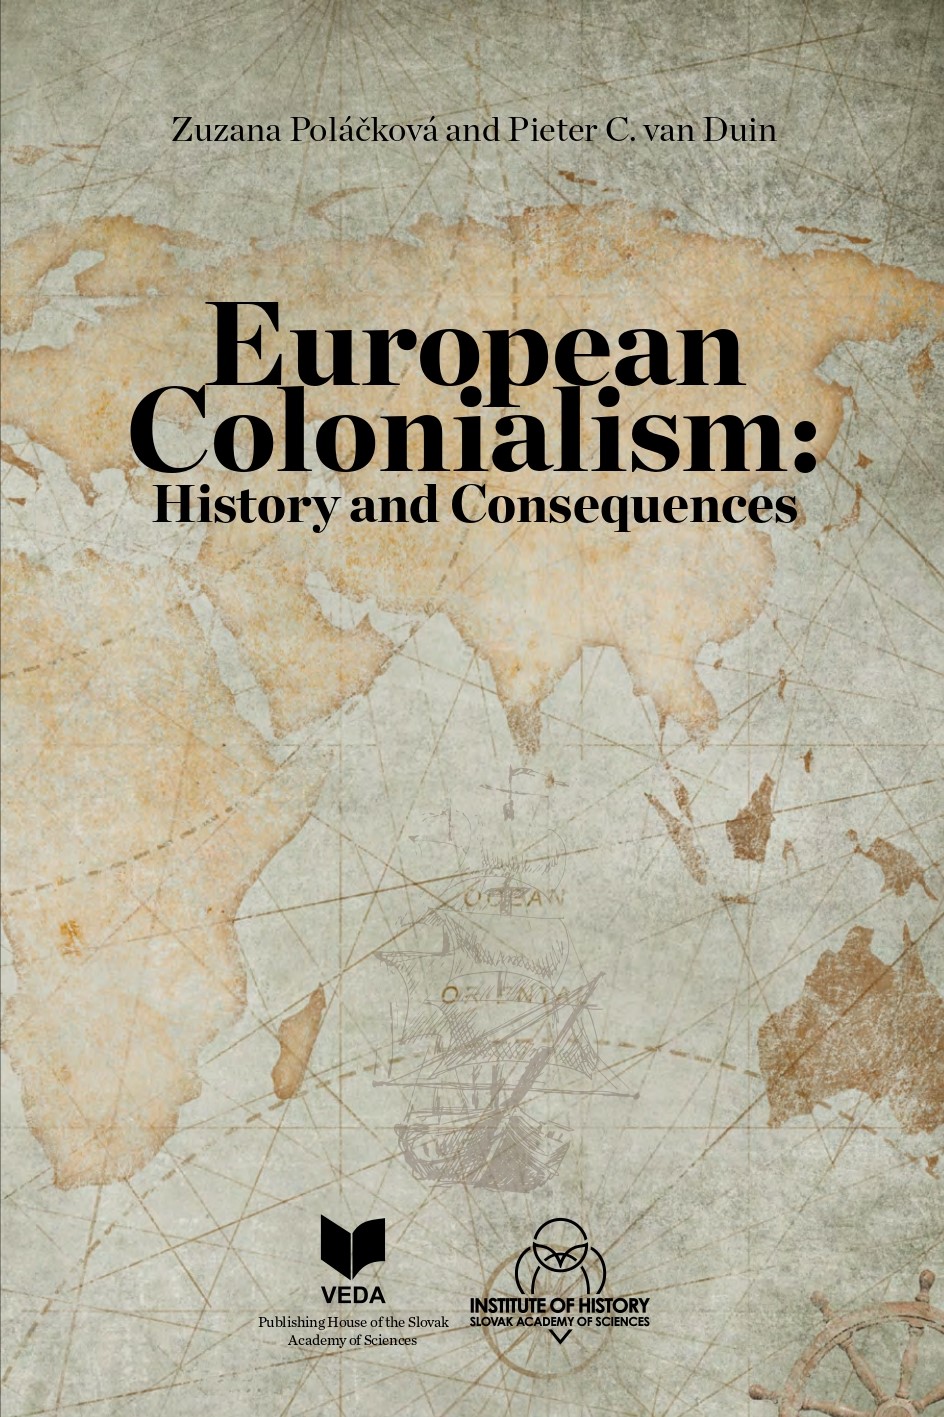 POLÁČKOVÁ, Zuzana - van DUIN, Pieter C.: European Colonialism: History and Consequences.